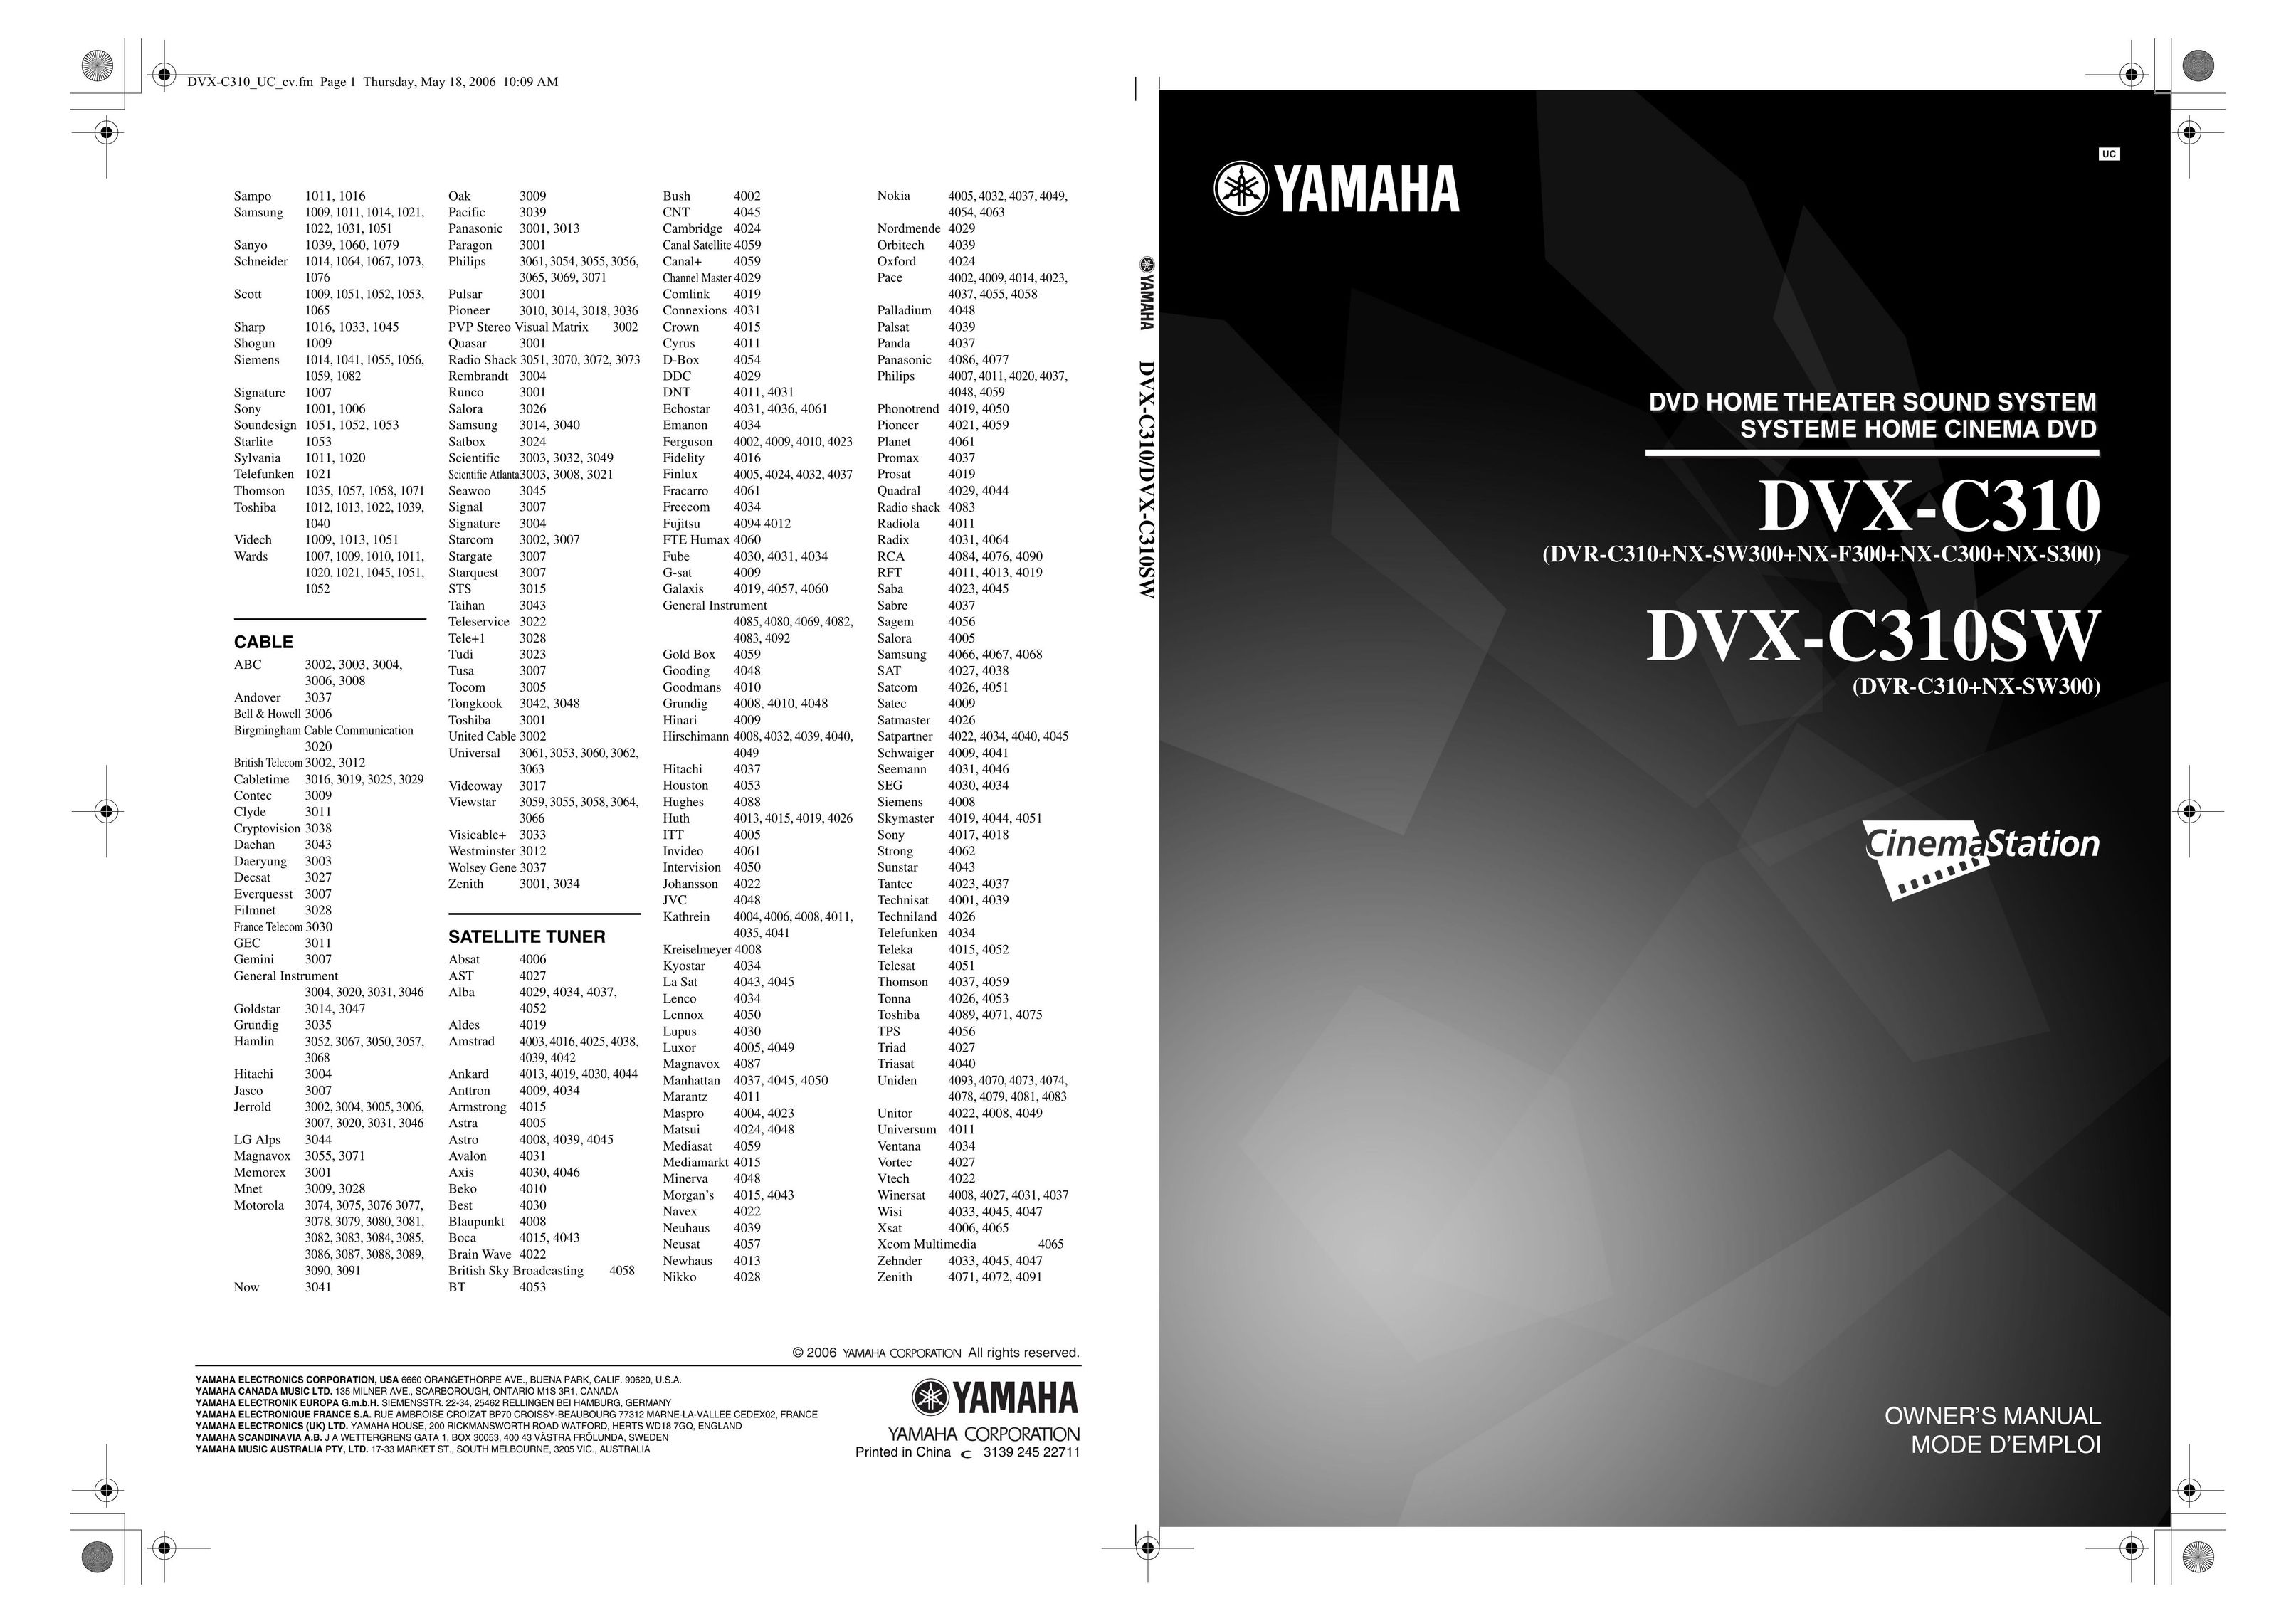 Yamaha DVX-C310 Speaker System User Manual